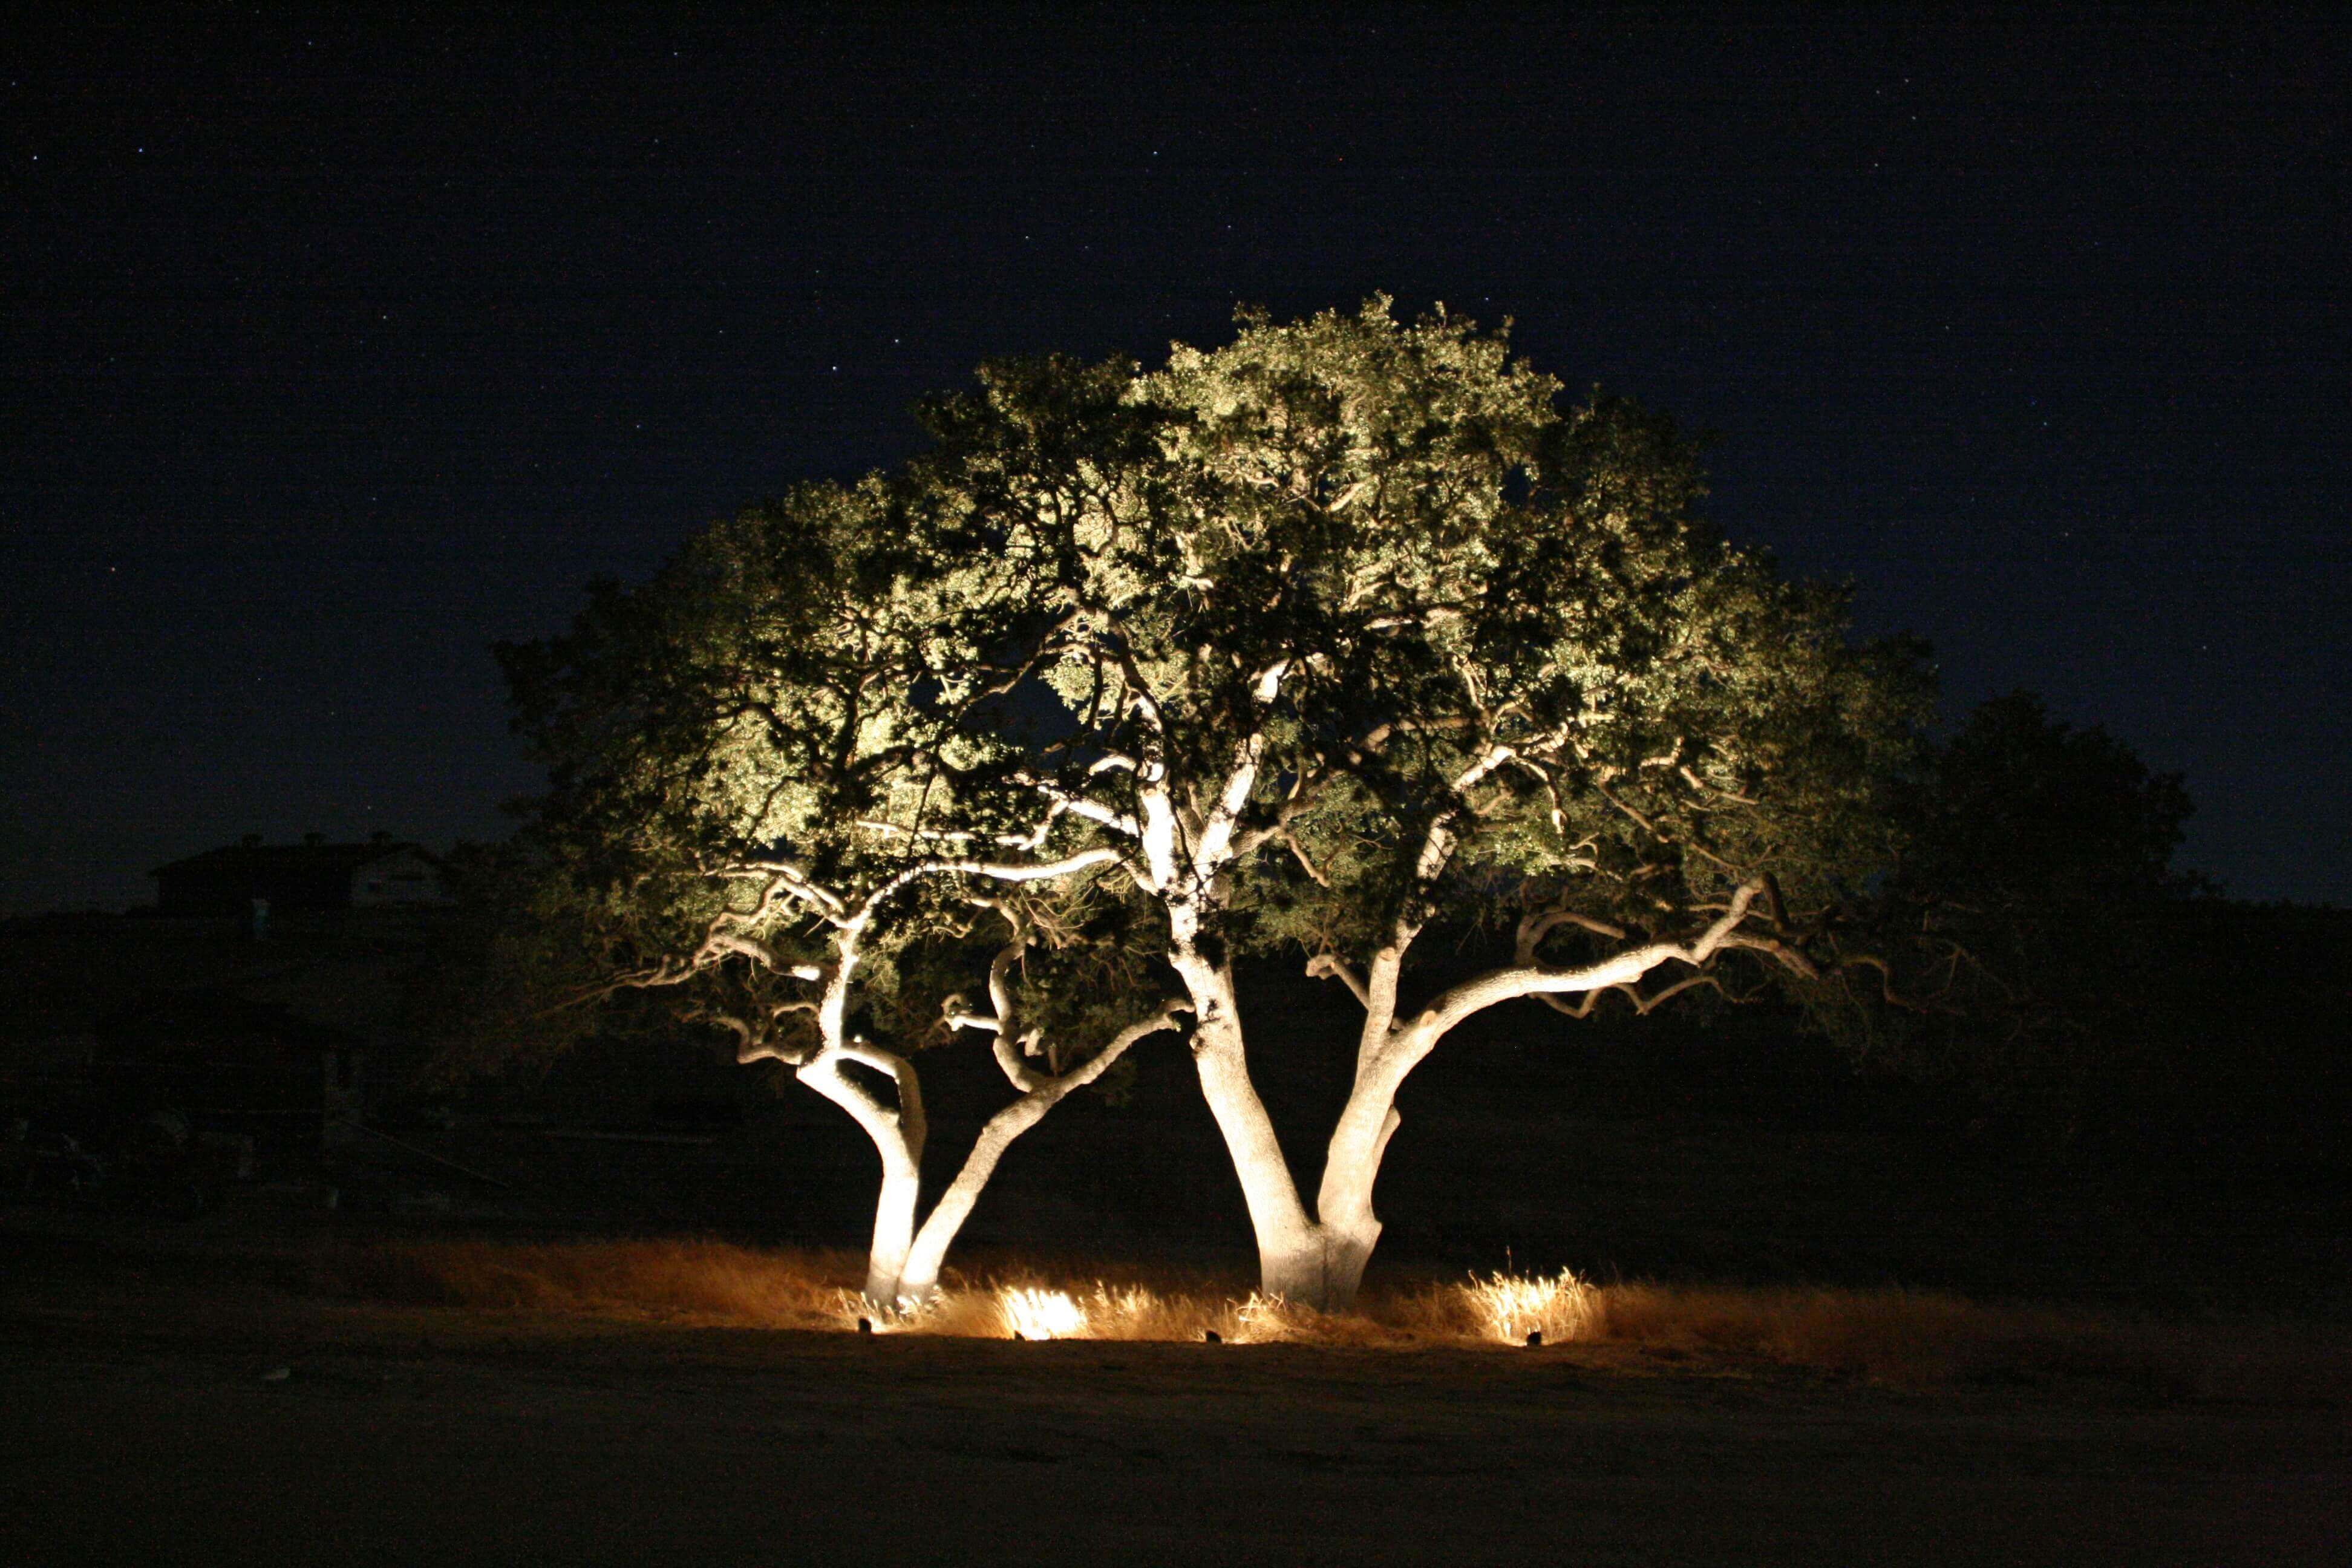 Trees with uplighting